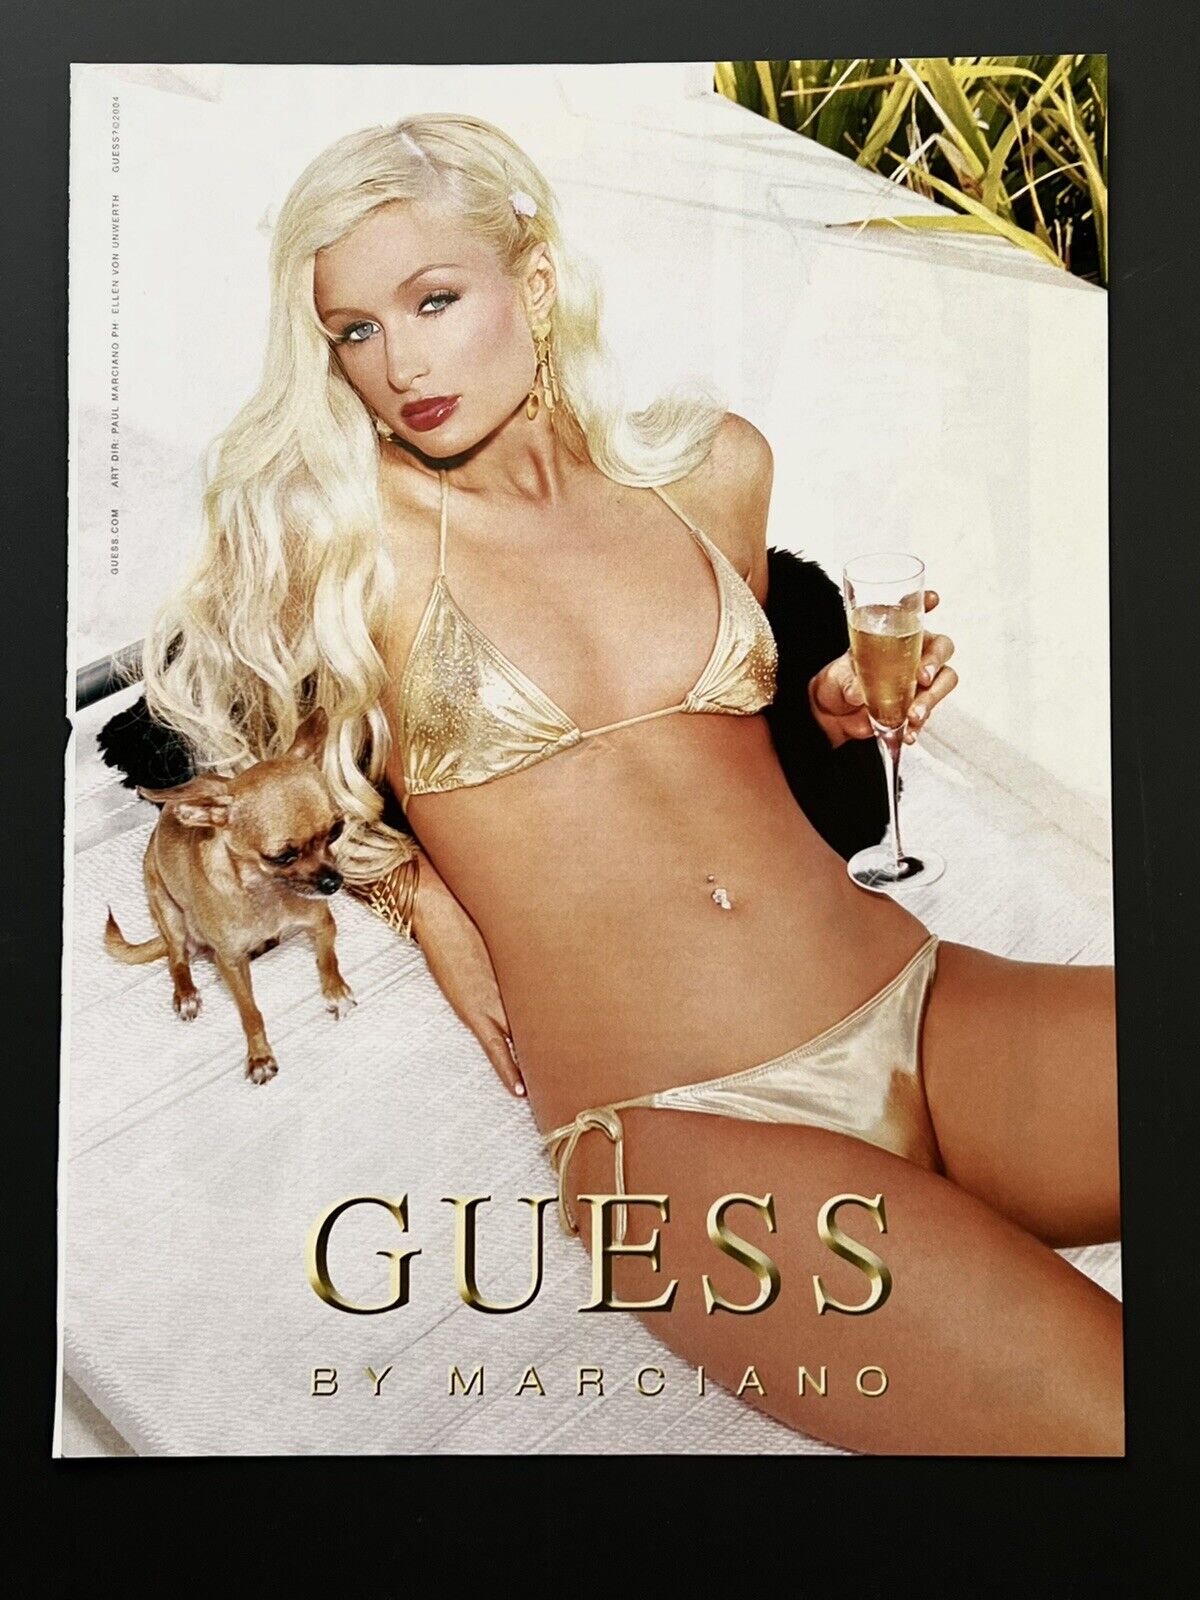 2004 PARIS HILTON GUESS AD - Poster/Print 21x27cm -By MARCIANO Sexy Bikini FHM10